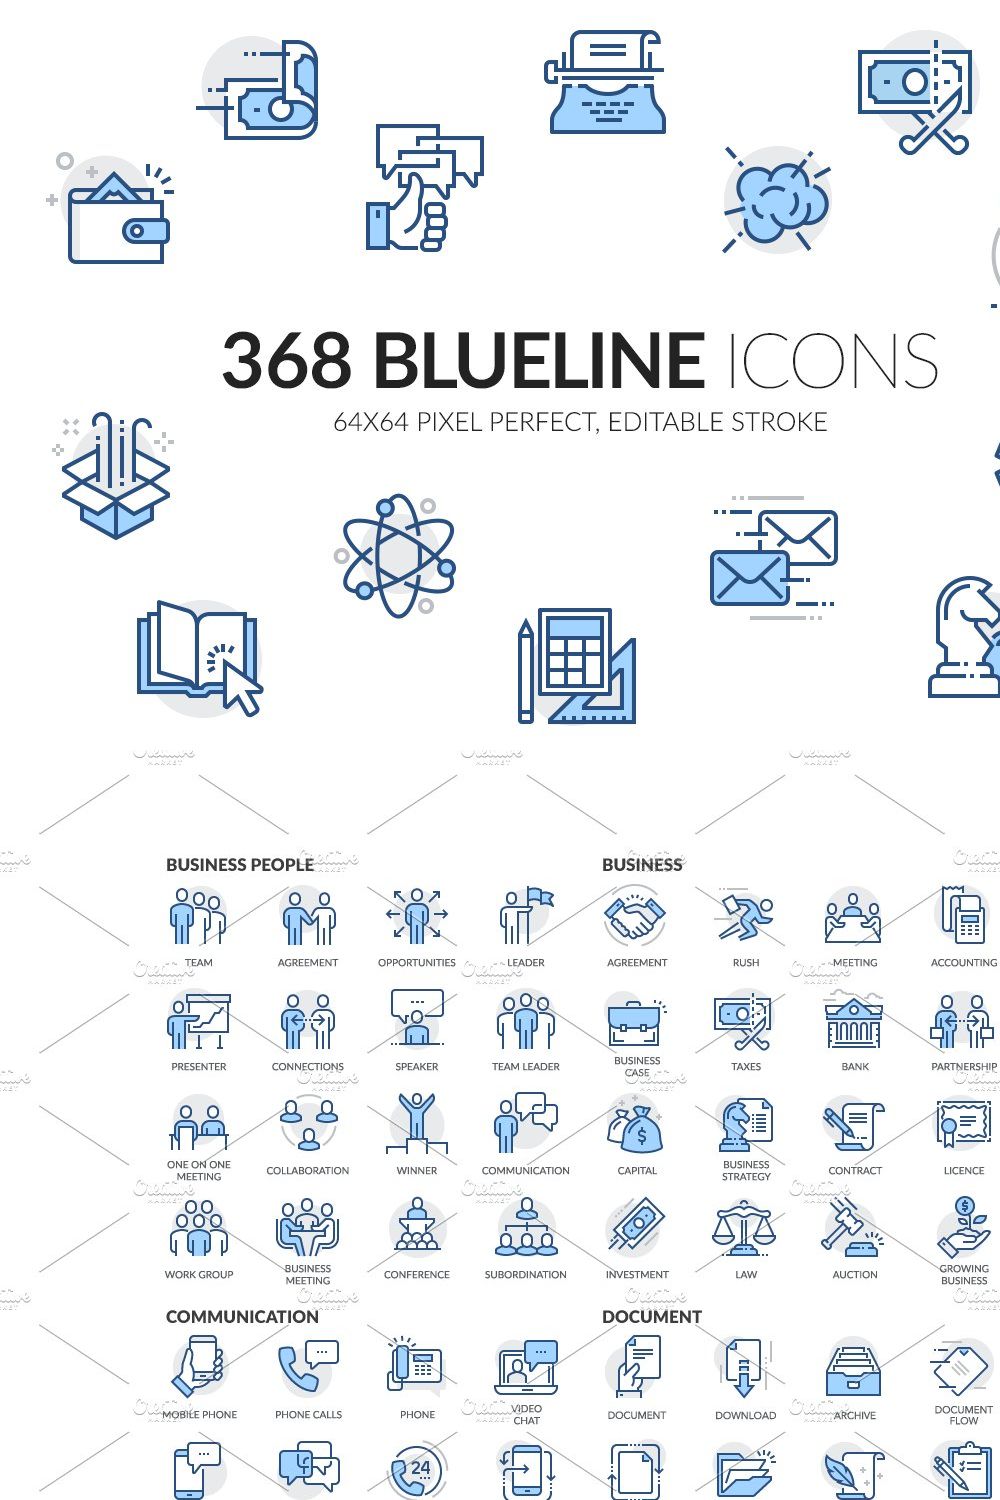 Blueline icons set pinterest preview image.